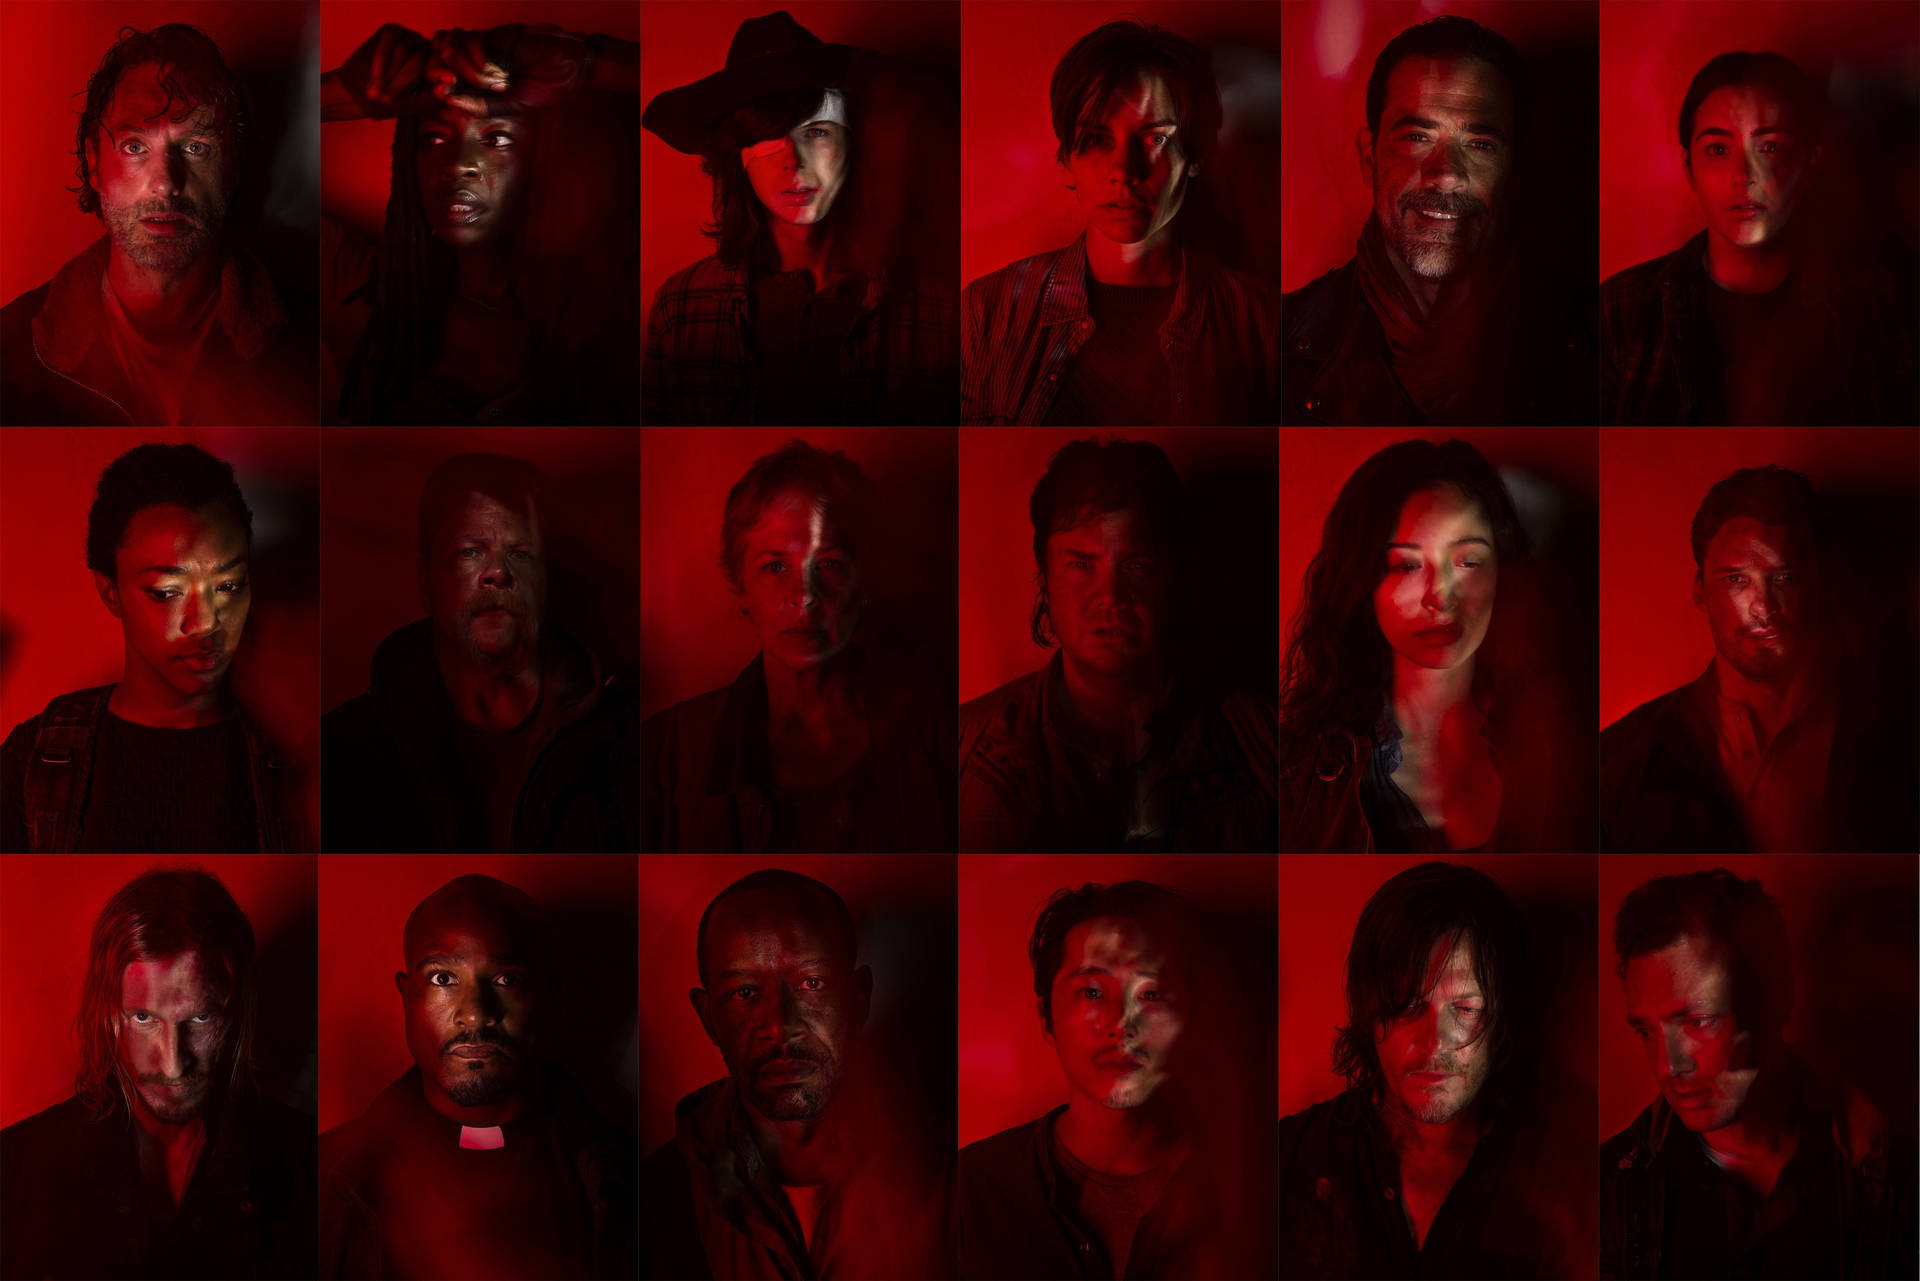 Negane Os Personagens De The Walking Dead. Papel de Parede